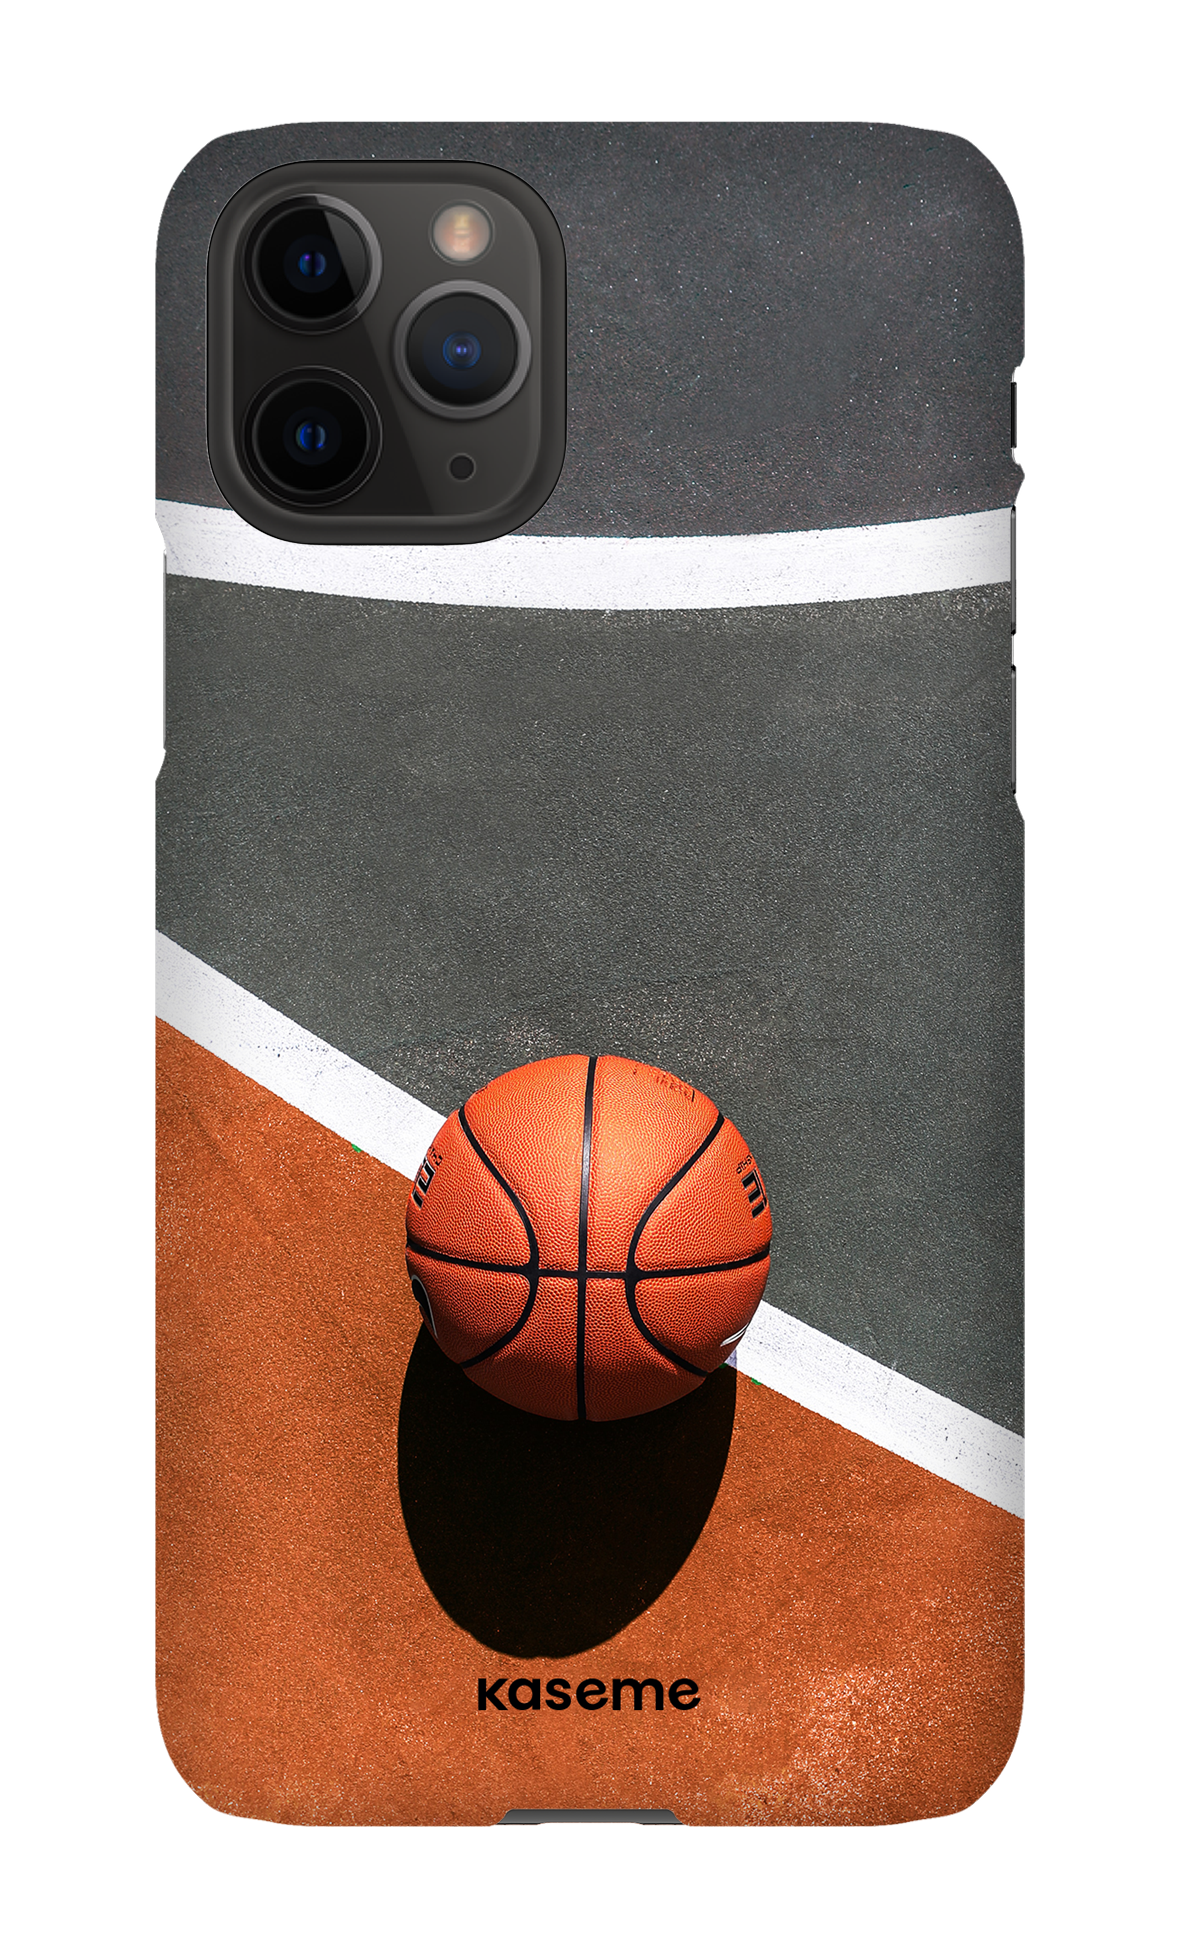 Baller - iPhone 11 Pro